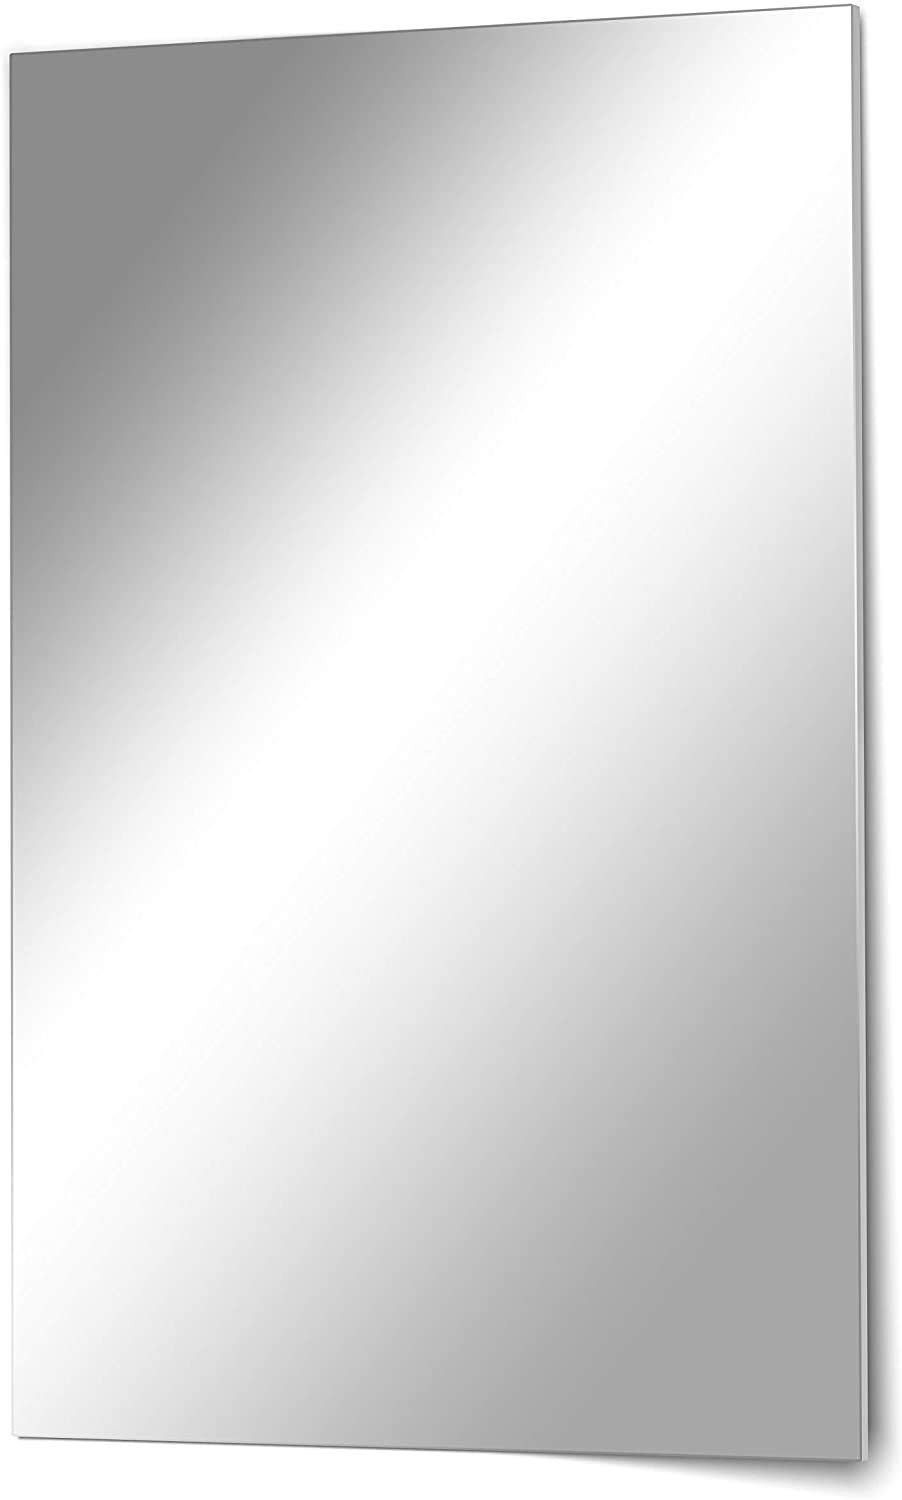 Your-Homestyle Kristallspiegel/Wandspiegel/Badspiegel Rahmenlos ohne Facette Mirror Made in Germany incl. Befestigungsmaterial (40 x 30)